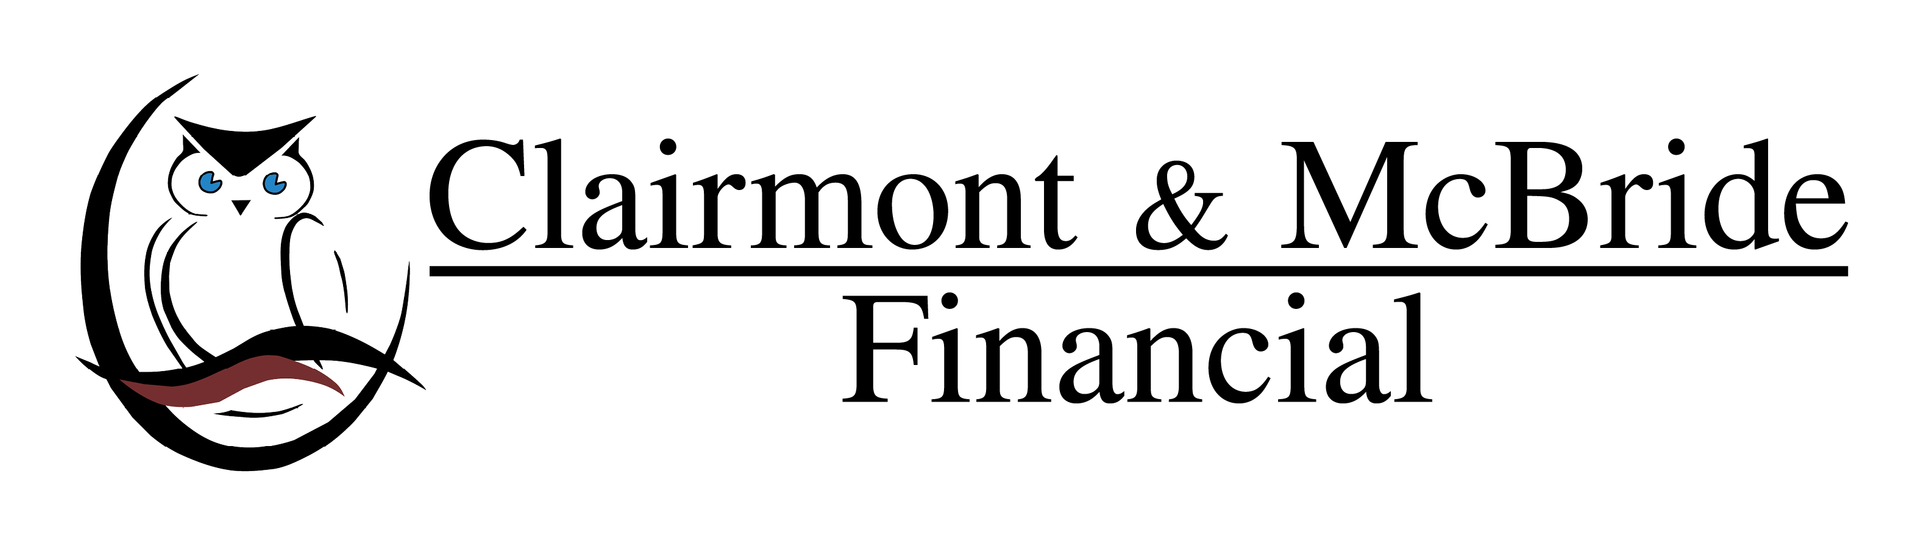 Clairmont & McBride Financial